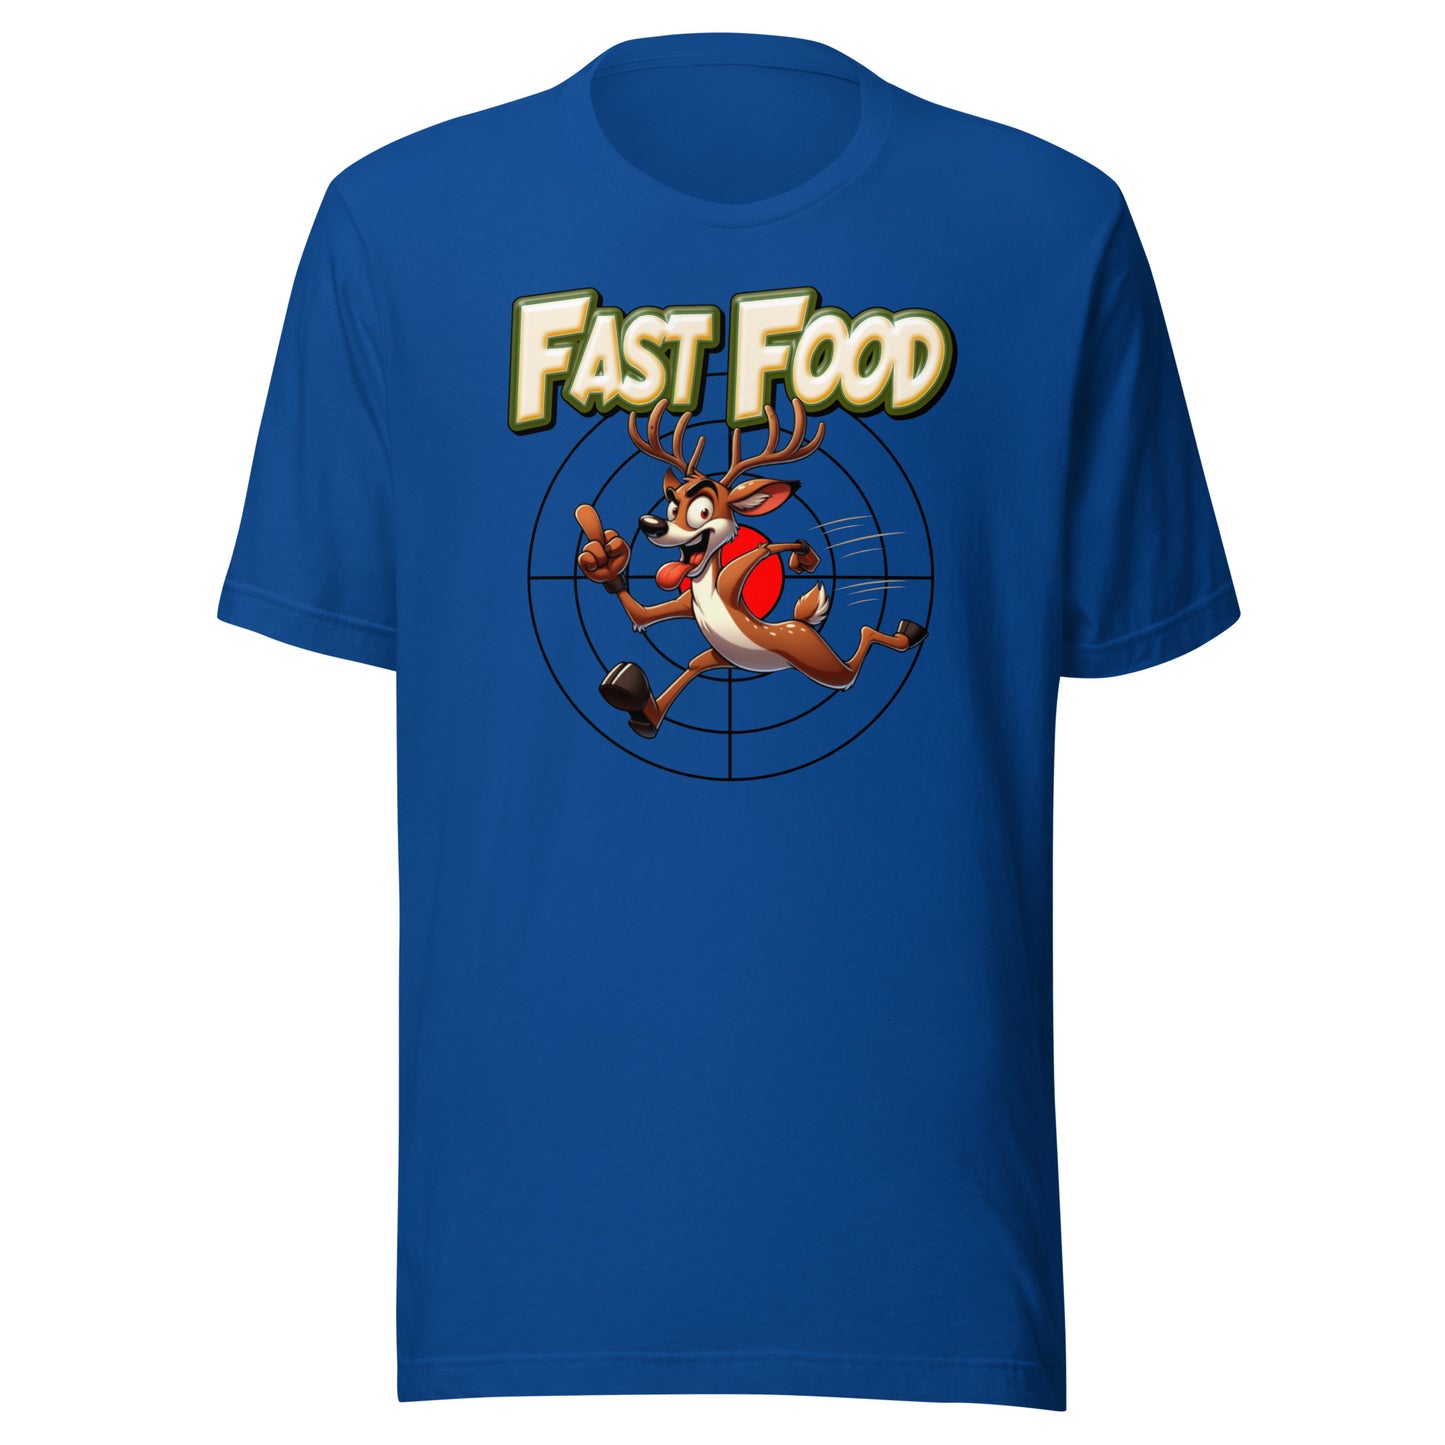  Fast Food Deer T-Shirt Unisex Hunting Tee ArcZeal Designs